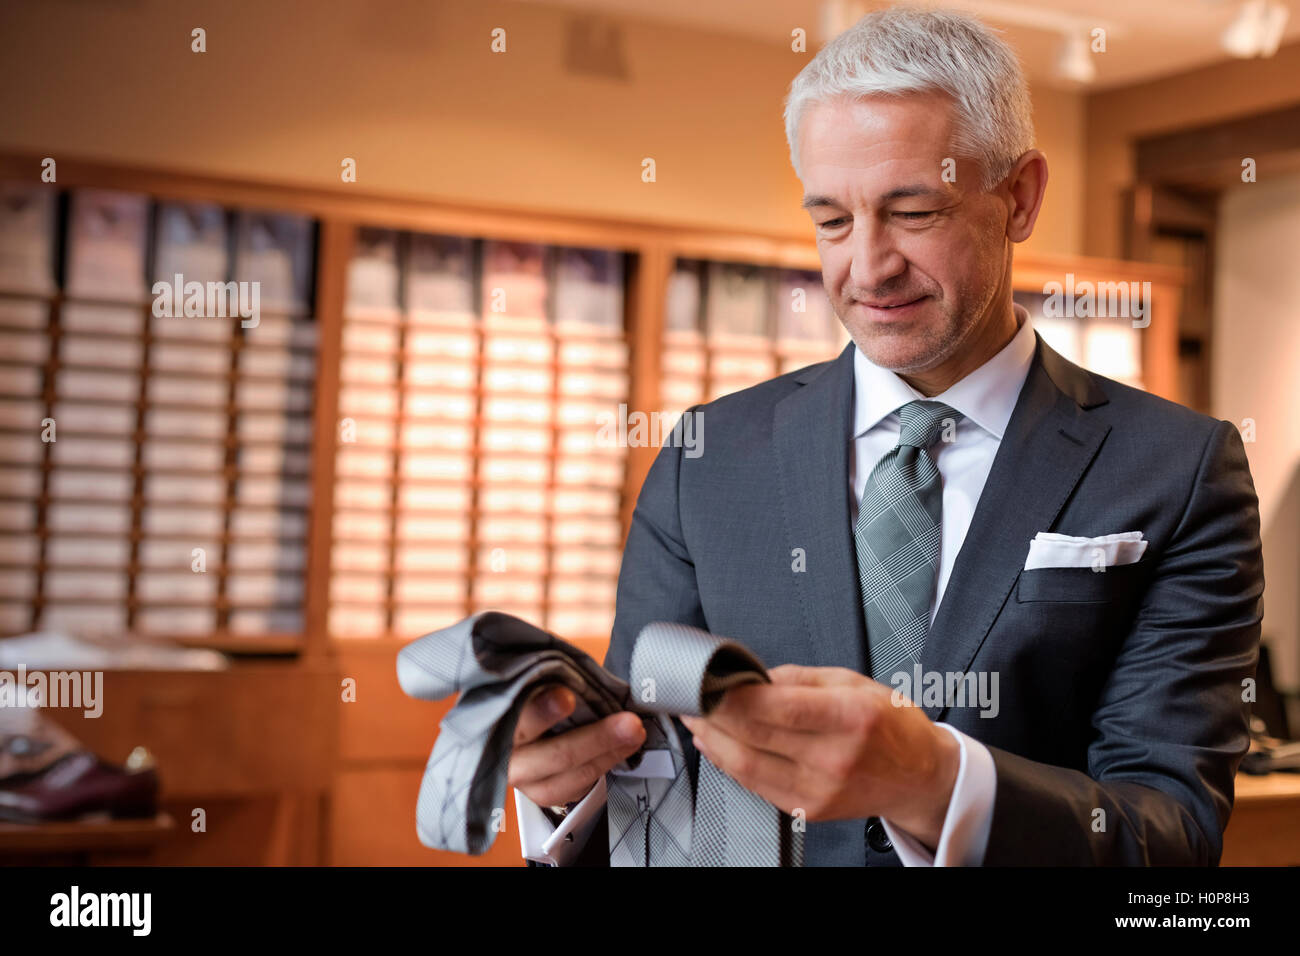 businessman browsing tie menswear shop Stock Photo